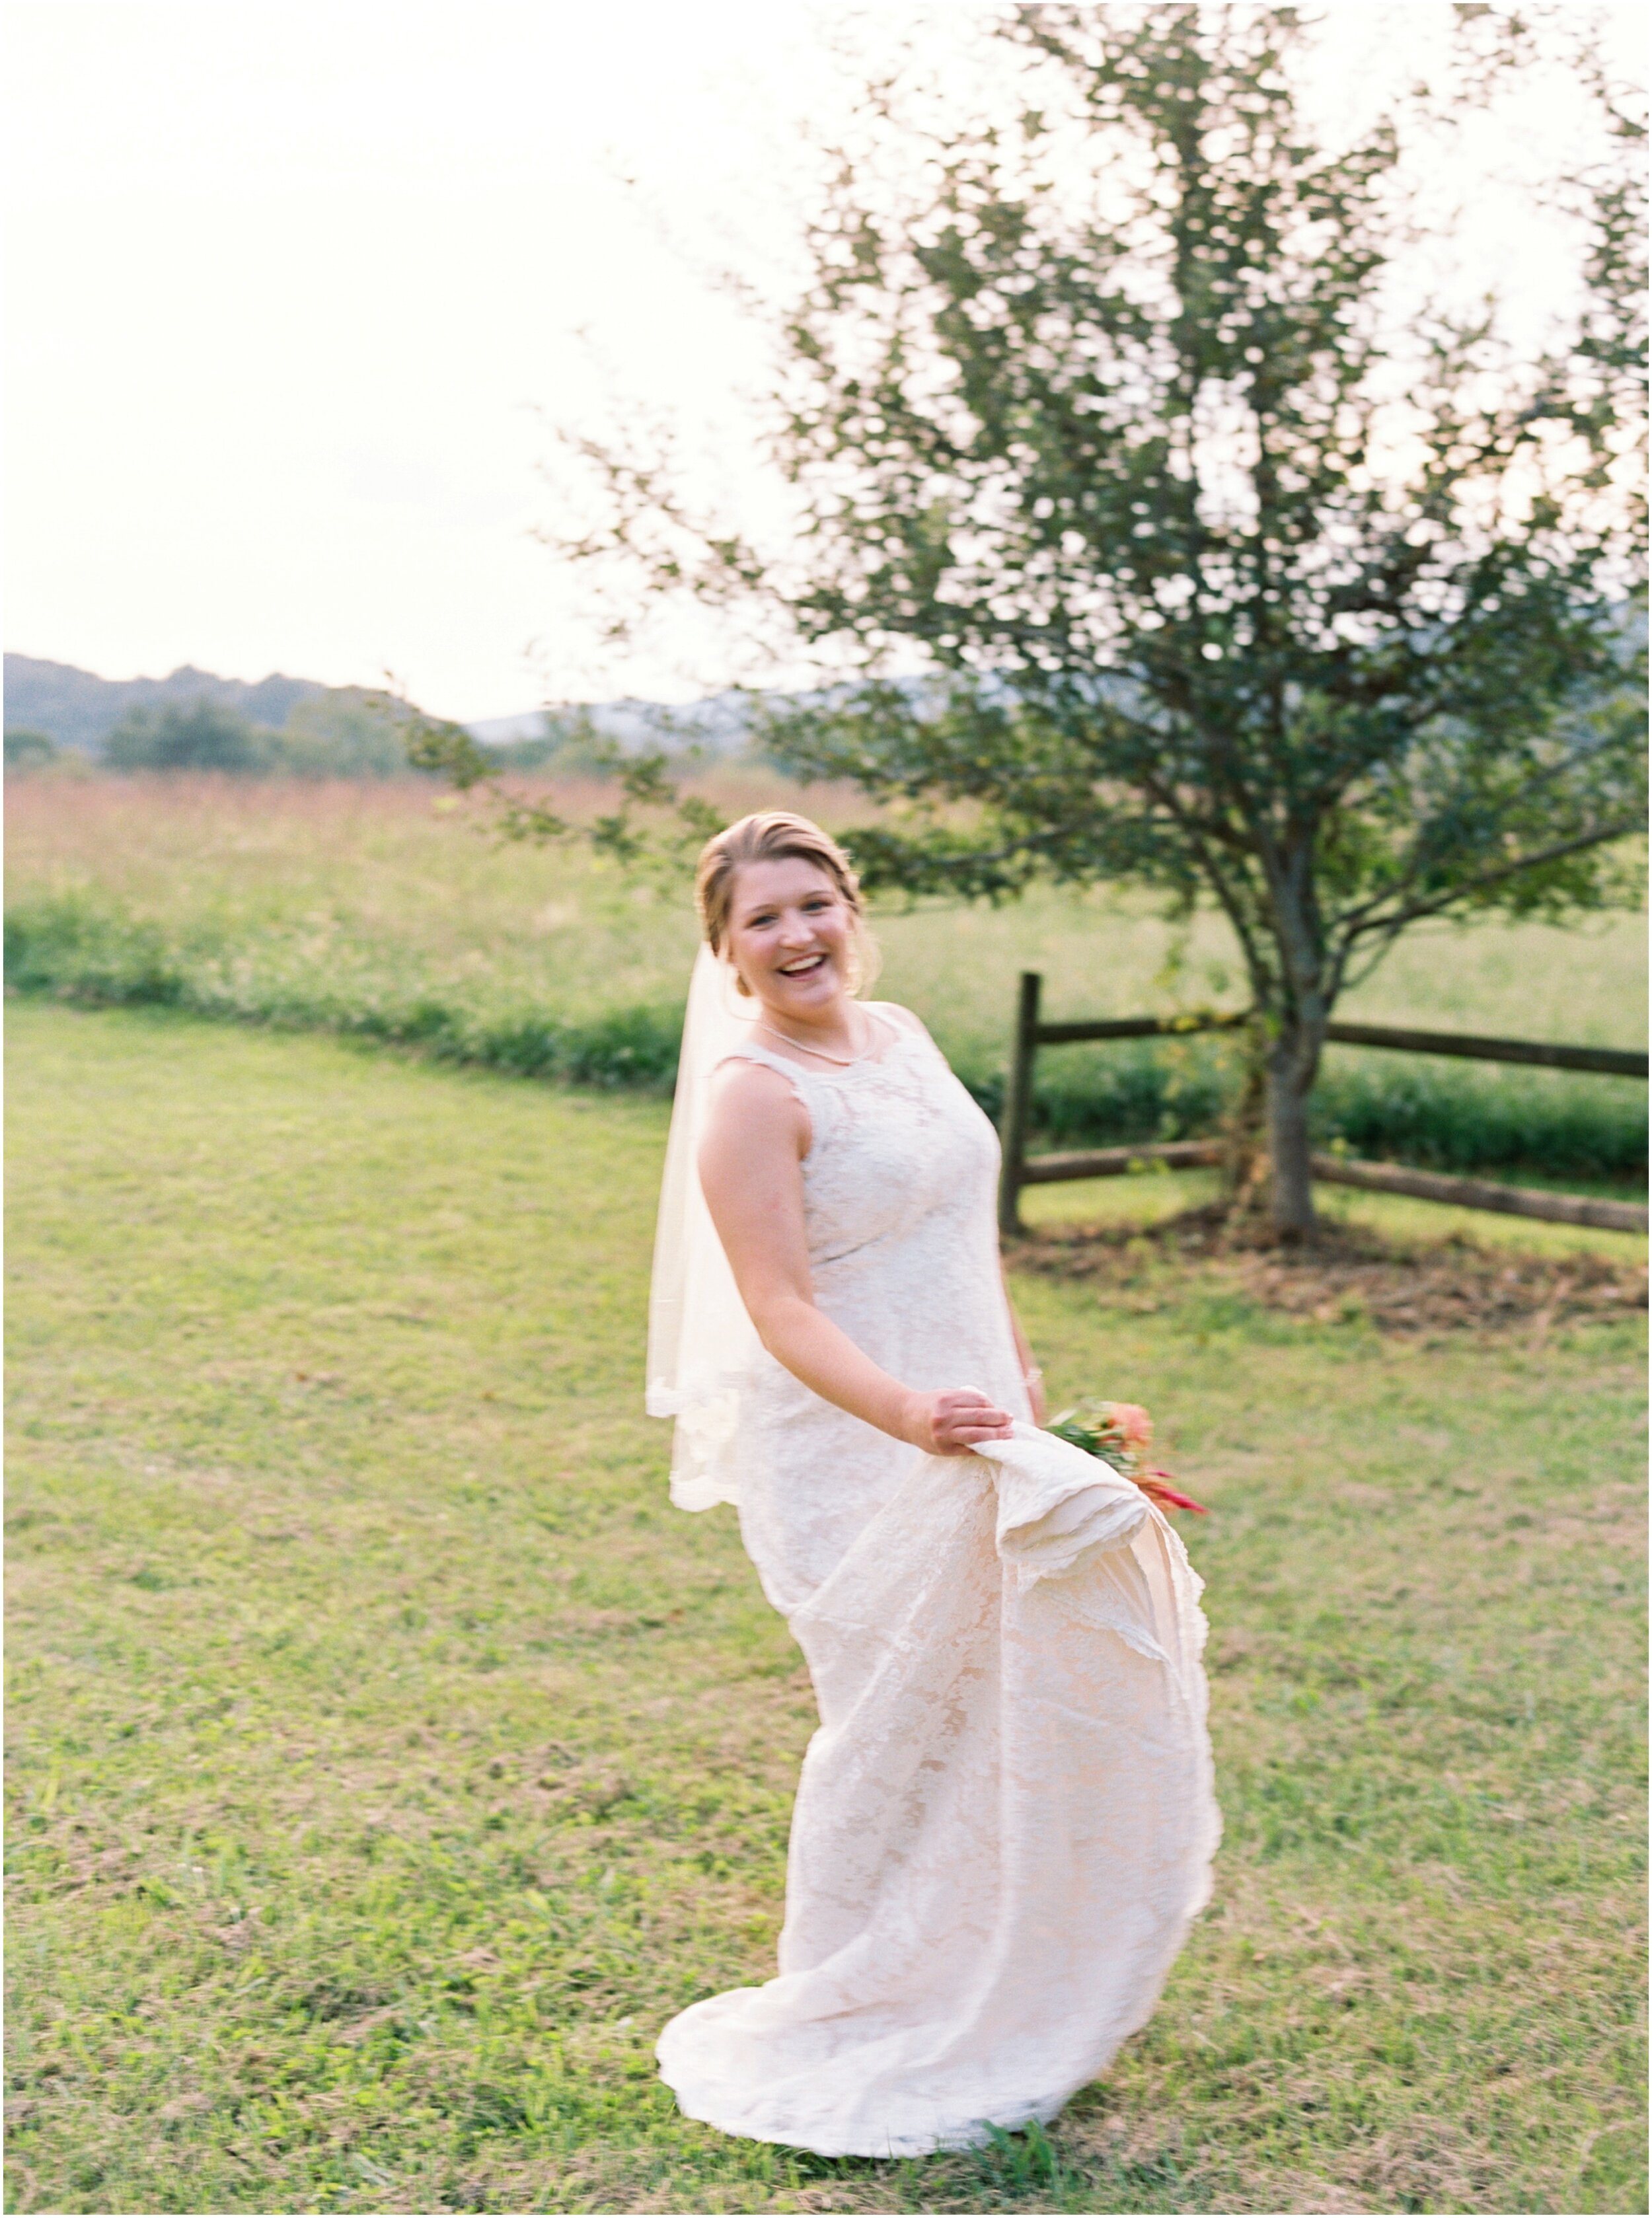 Hannah-Virginia-Rustic-Elegant-River-Bridal-Portraits_0022.jpg